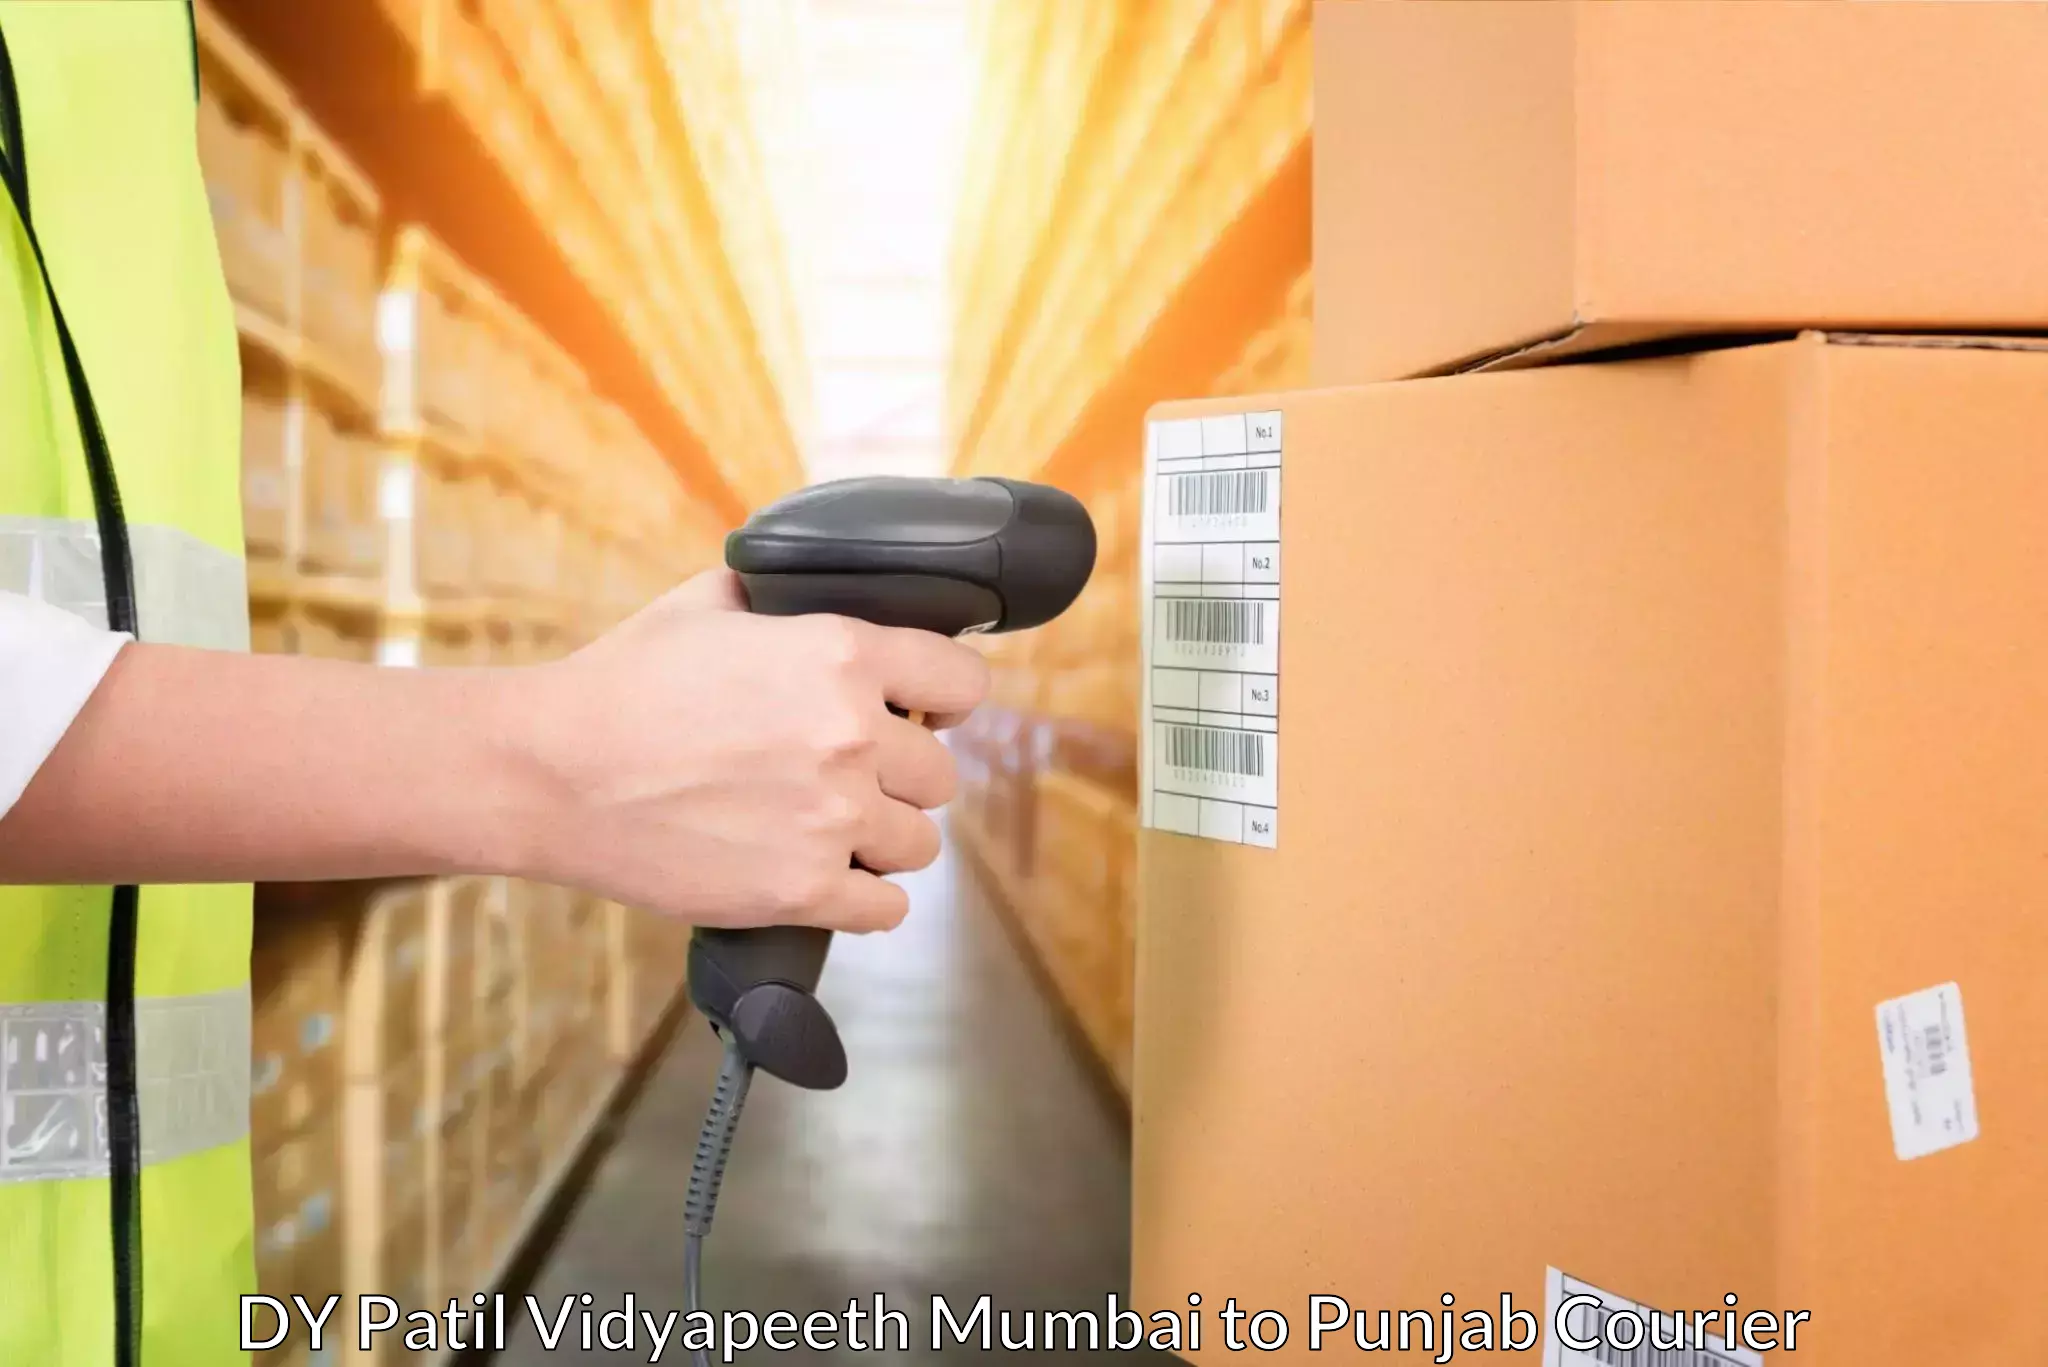 Logistics service provider DY Patil Vidyapeeth Mumbai to Malerkotla